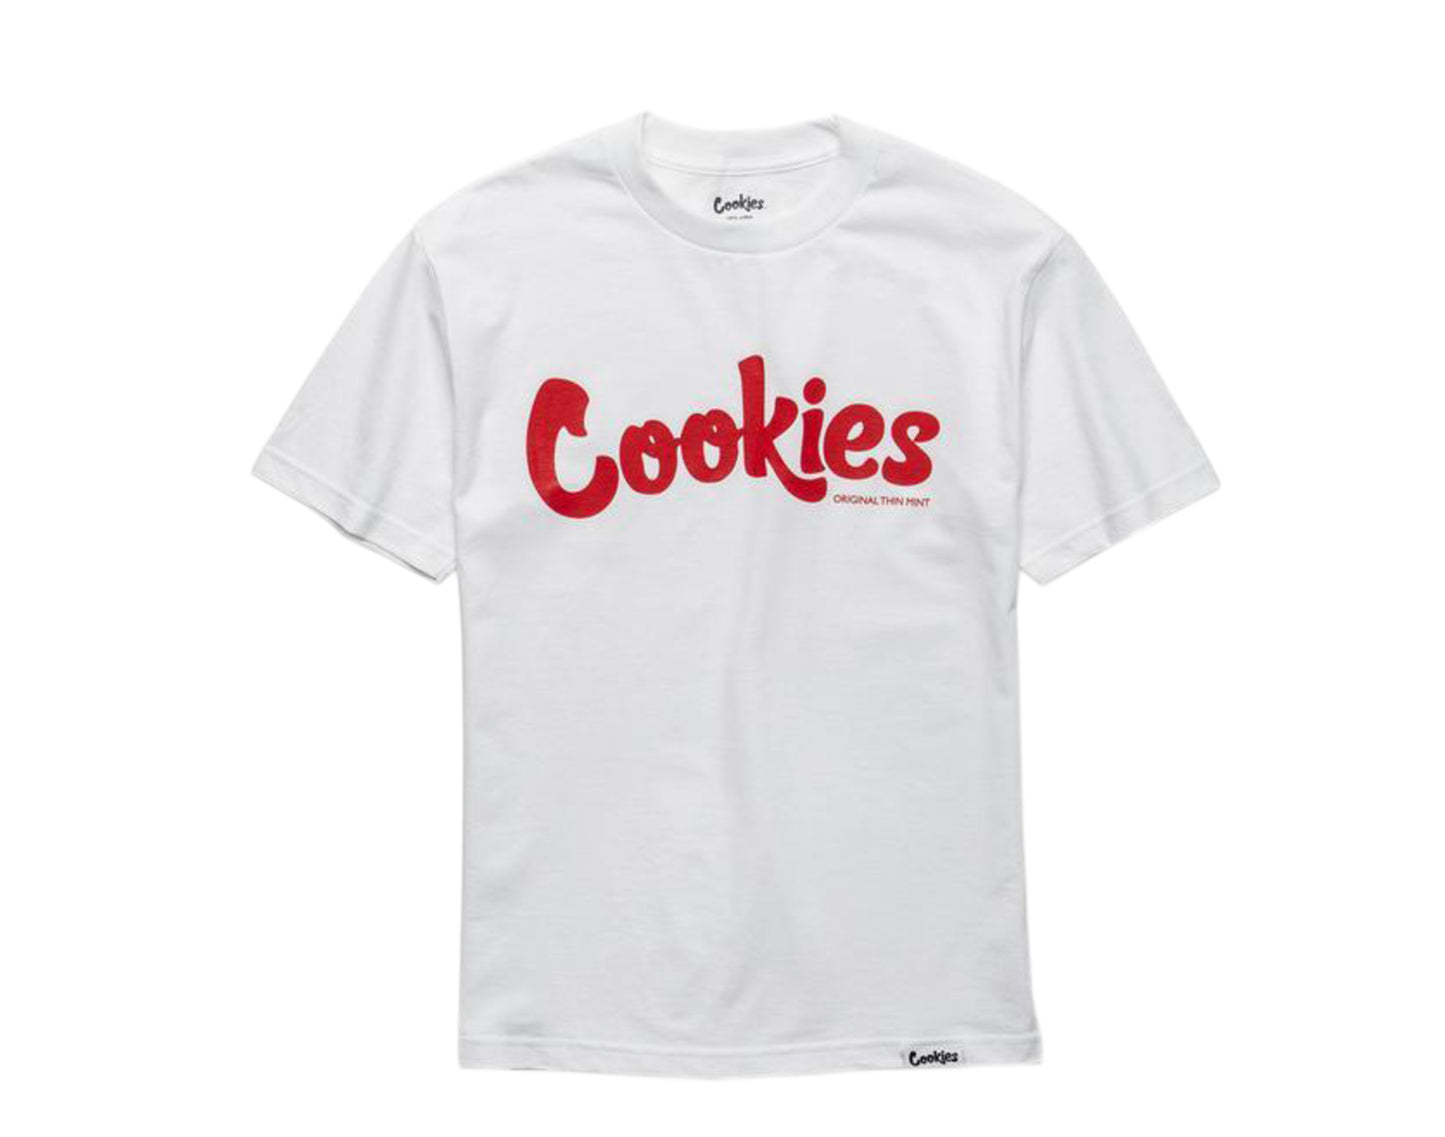 Cookies Original Logo Thin Mint Heather White/Red Men's Tee Shirt 1544T4196-WHR